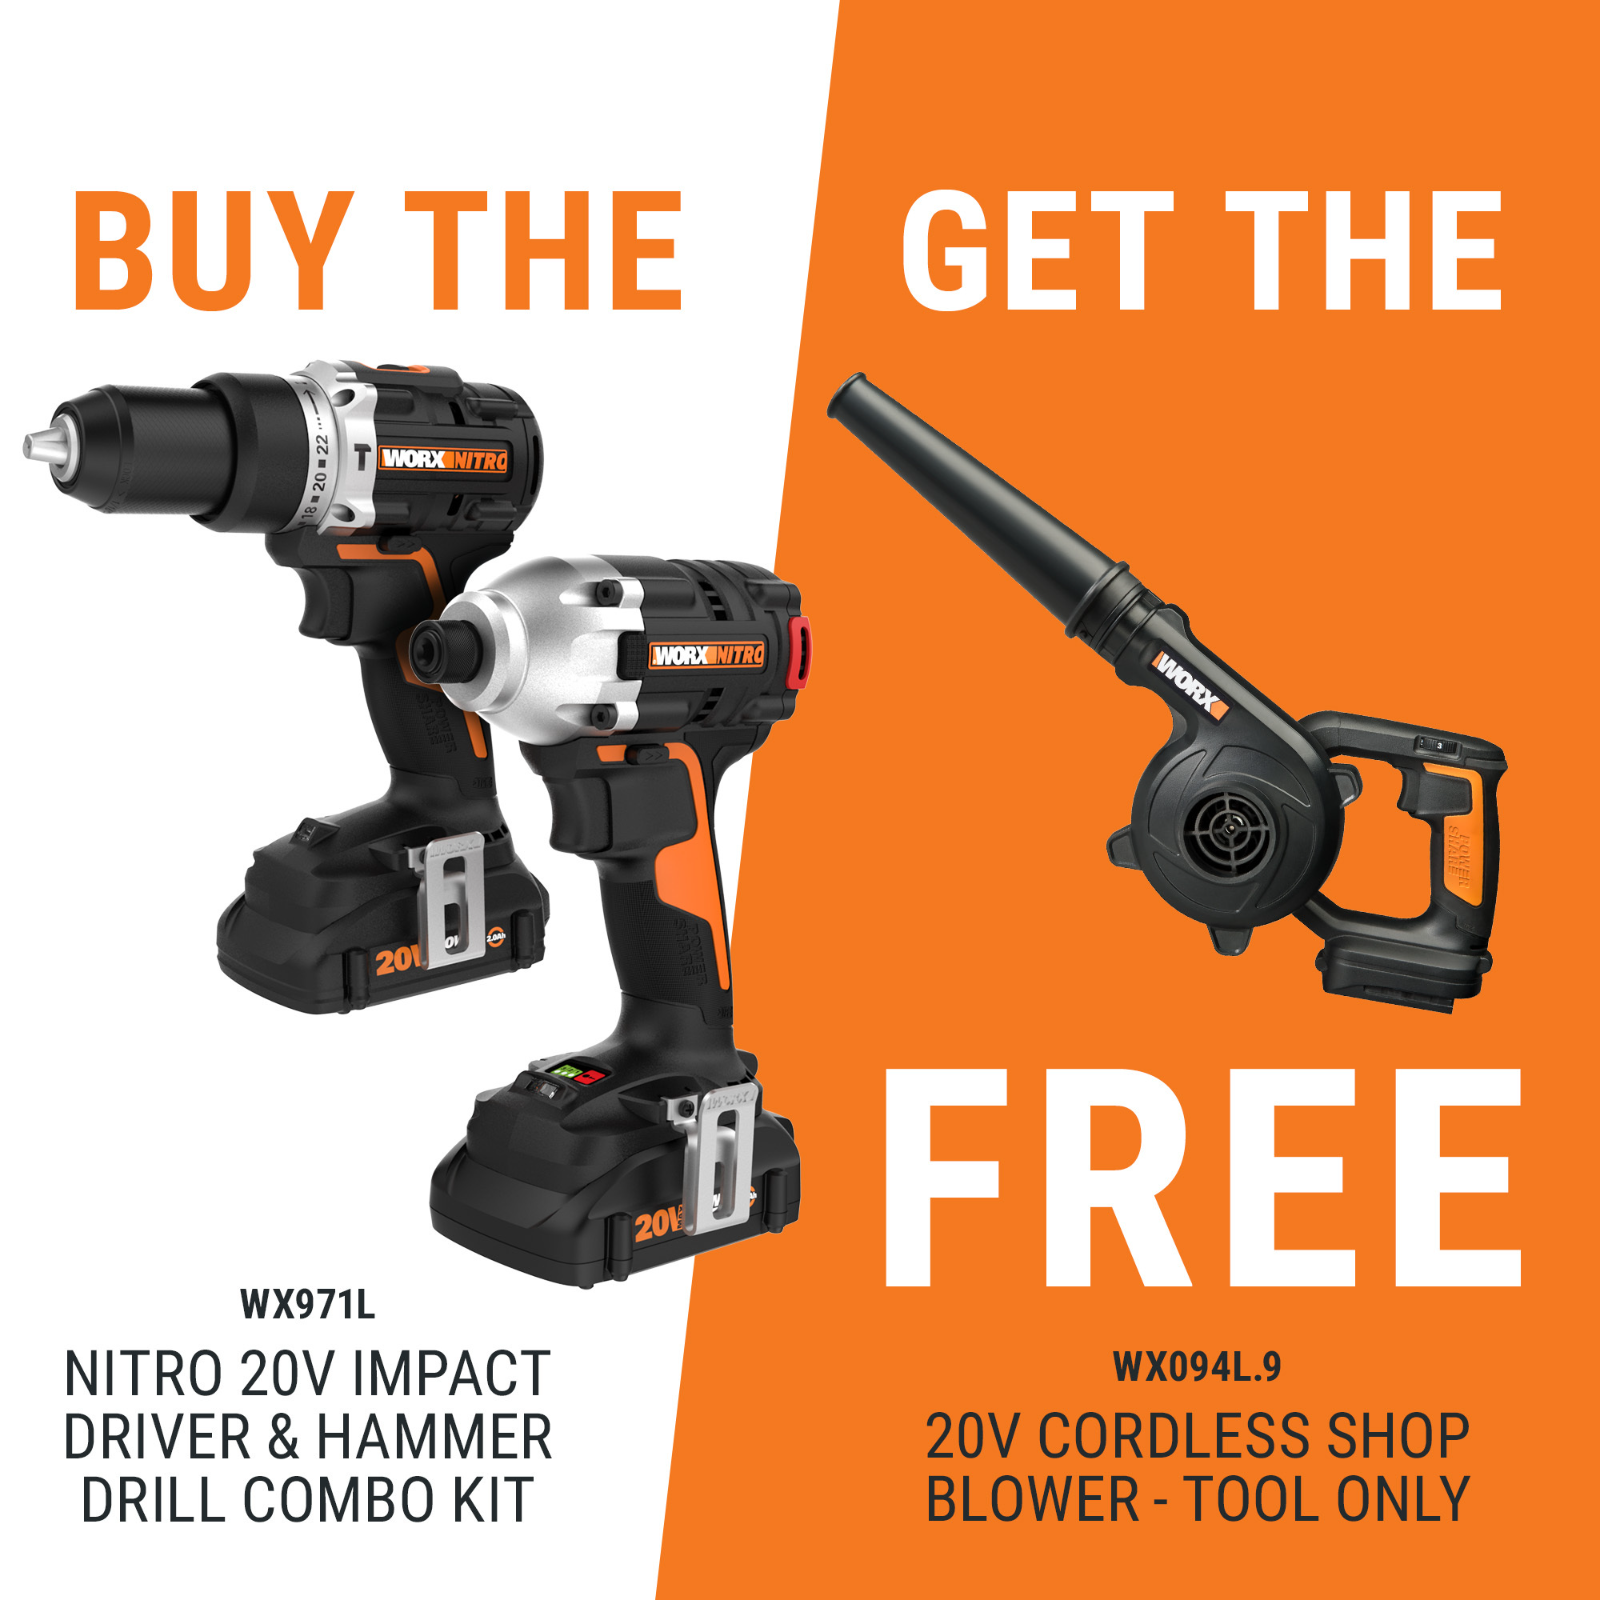 Worx Nitro 20V Impact Driver & Hammer Drill Combo Kit w/ 20V Cordless Shop Blower $180 + Free Shipping